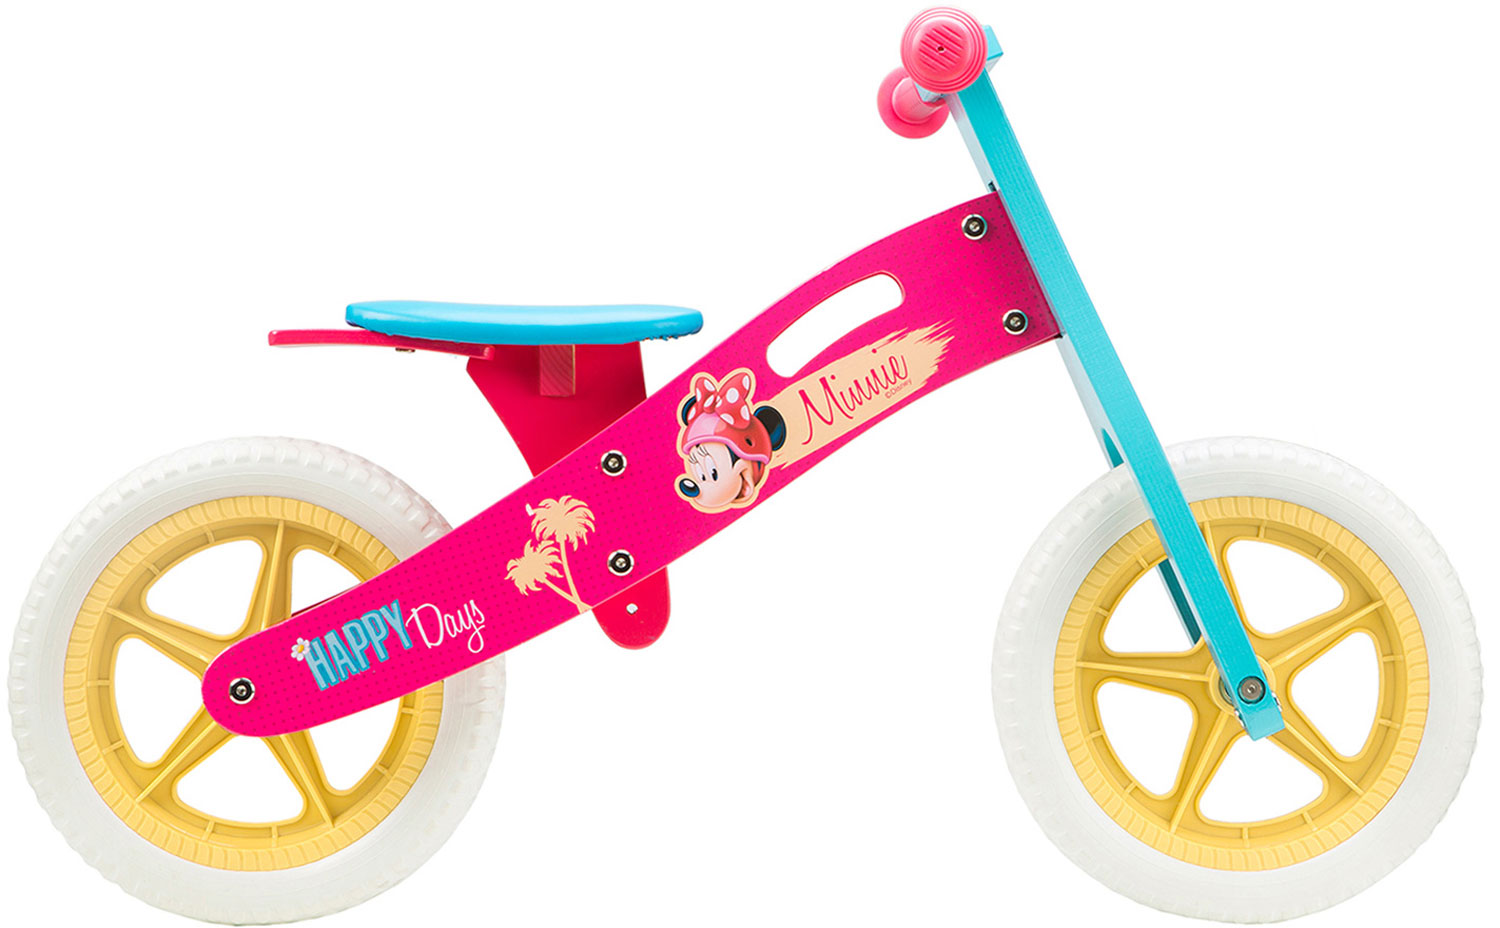 Wooden children’s push bike